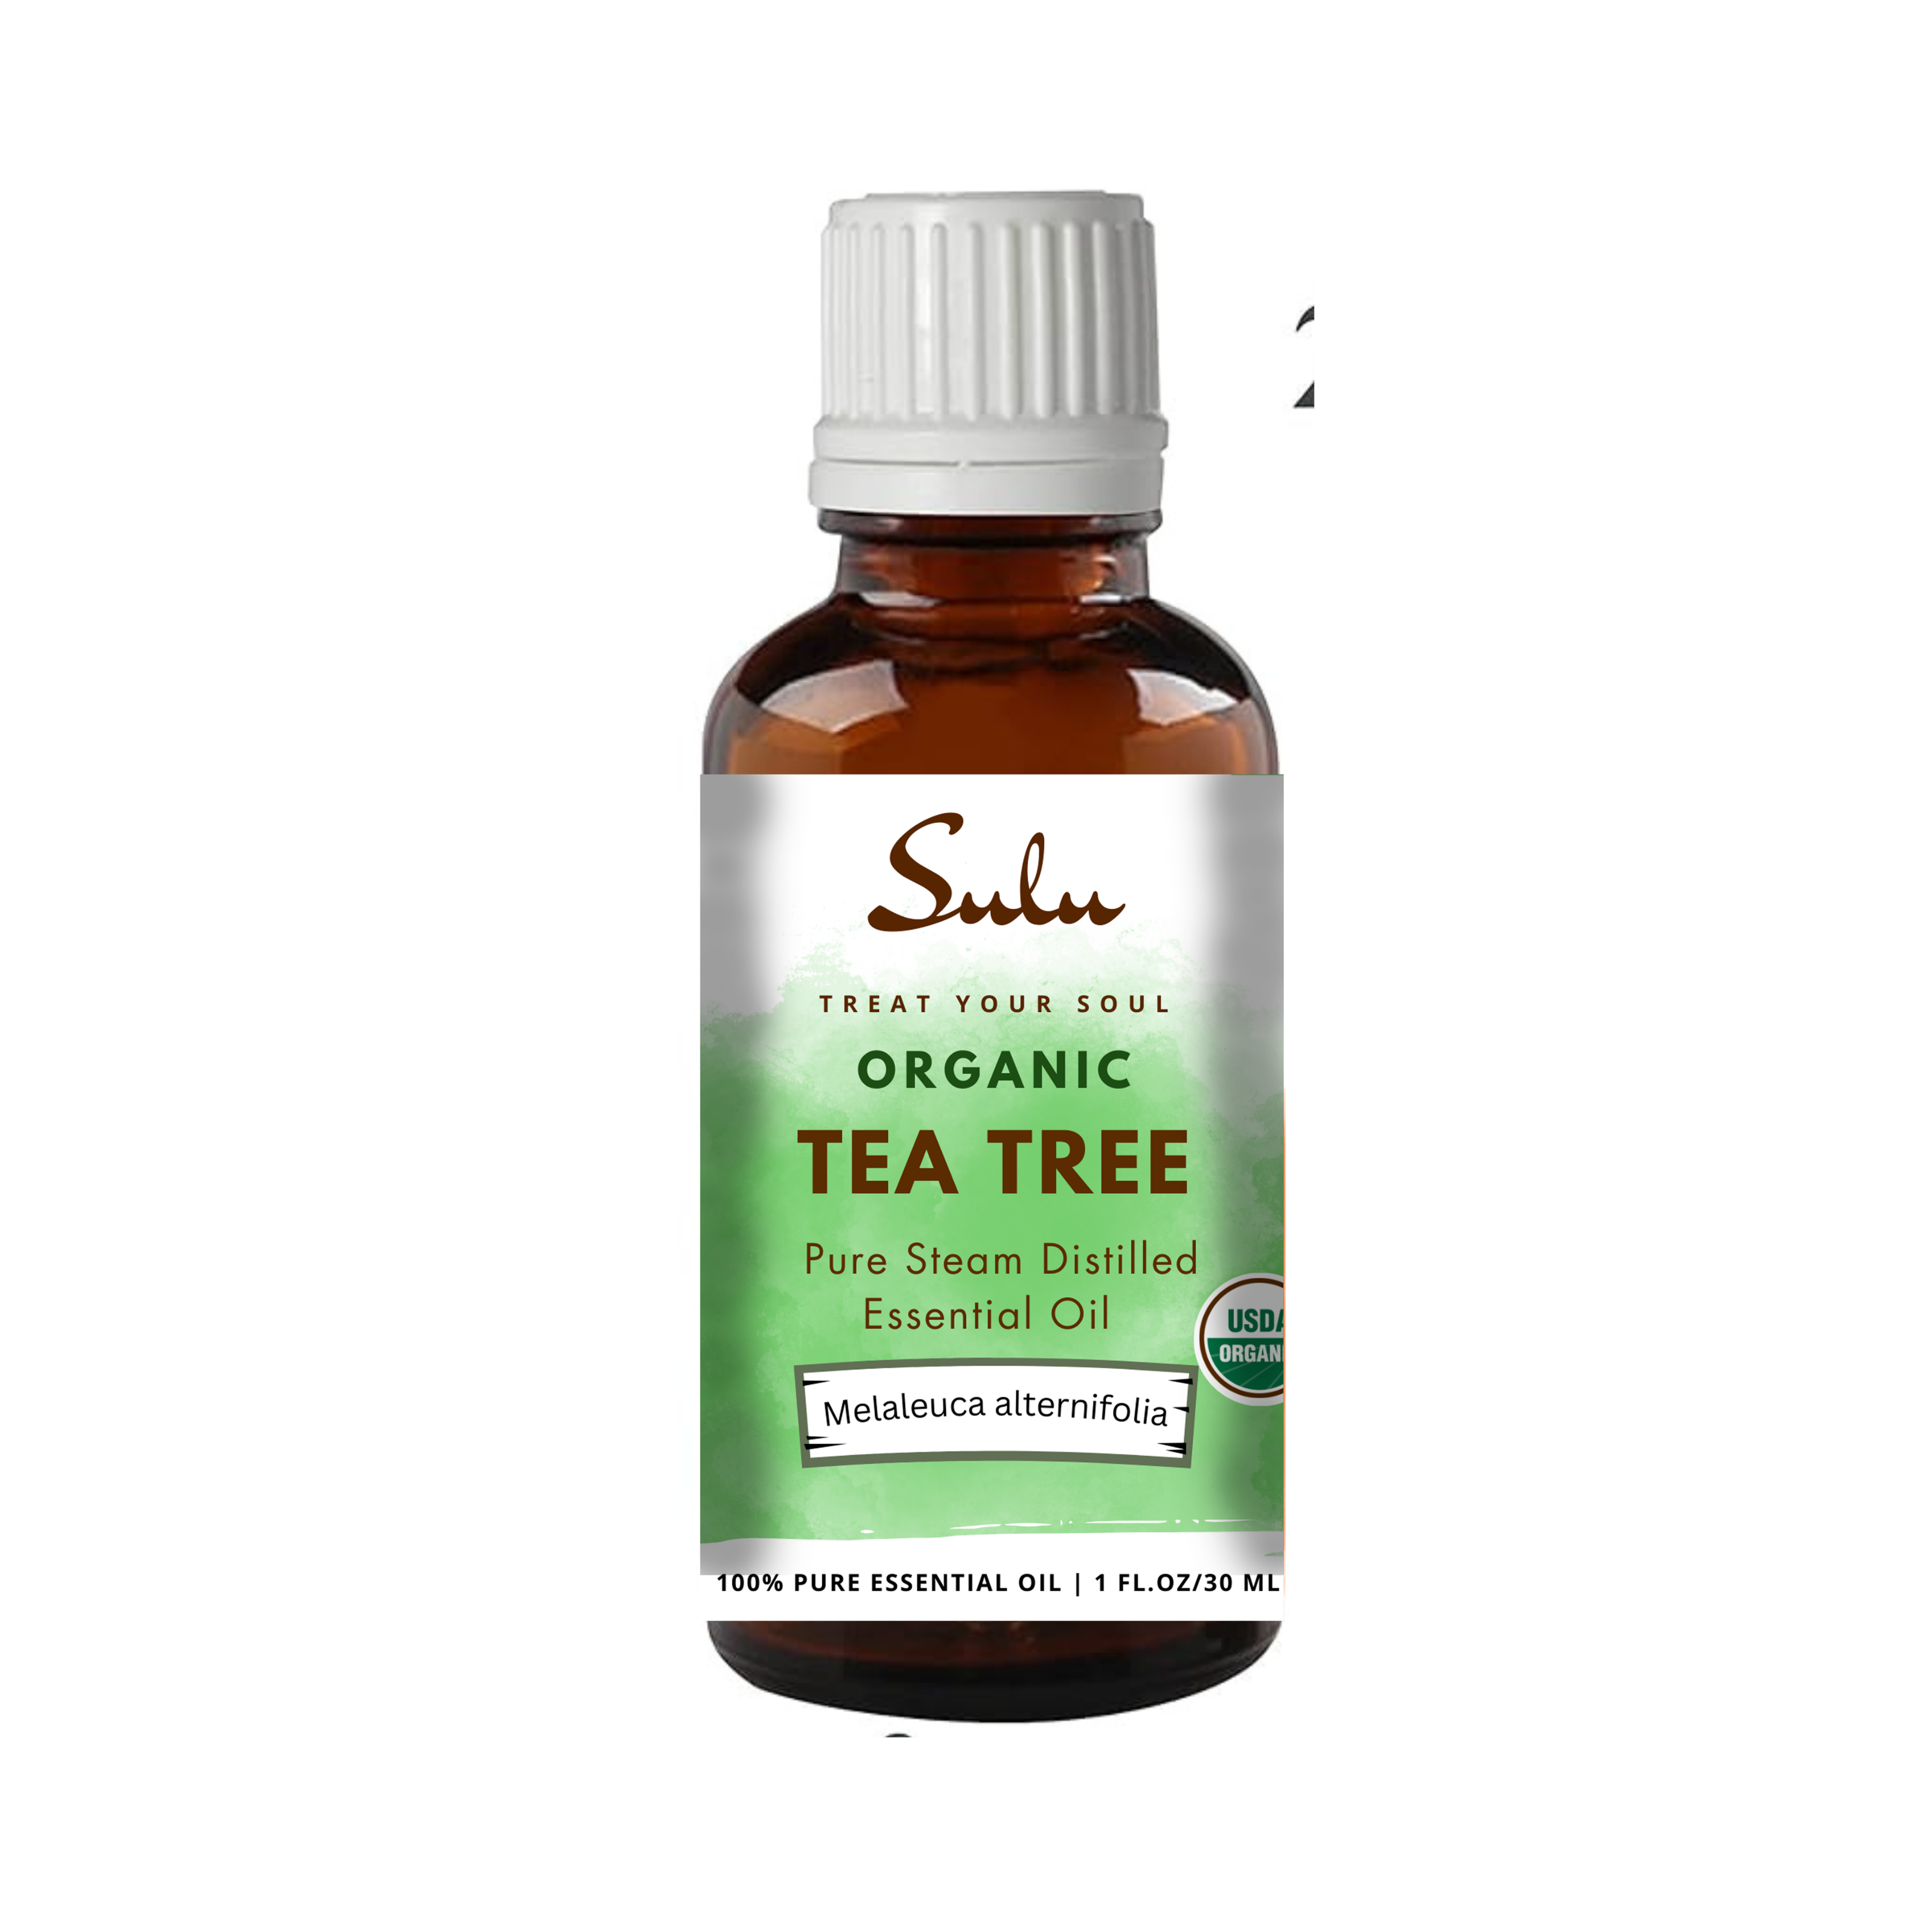 Heytree Vanilla Essential Oil 100ml 100% Pure Therapeutic - Temu